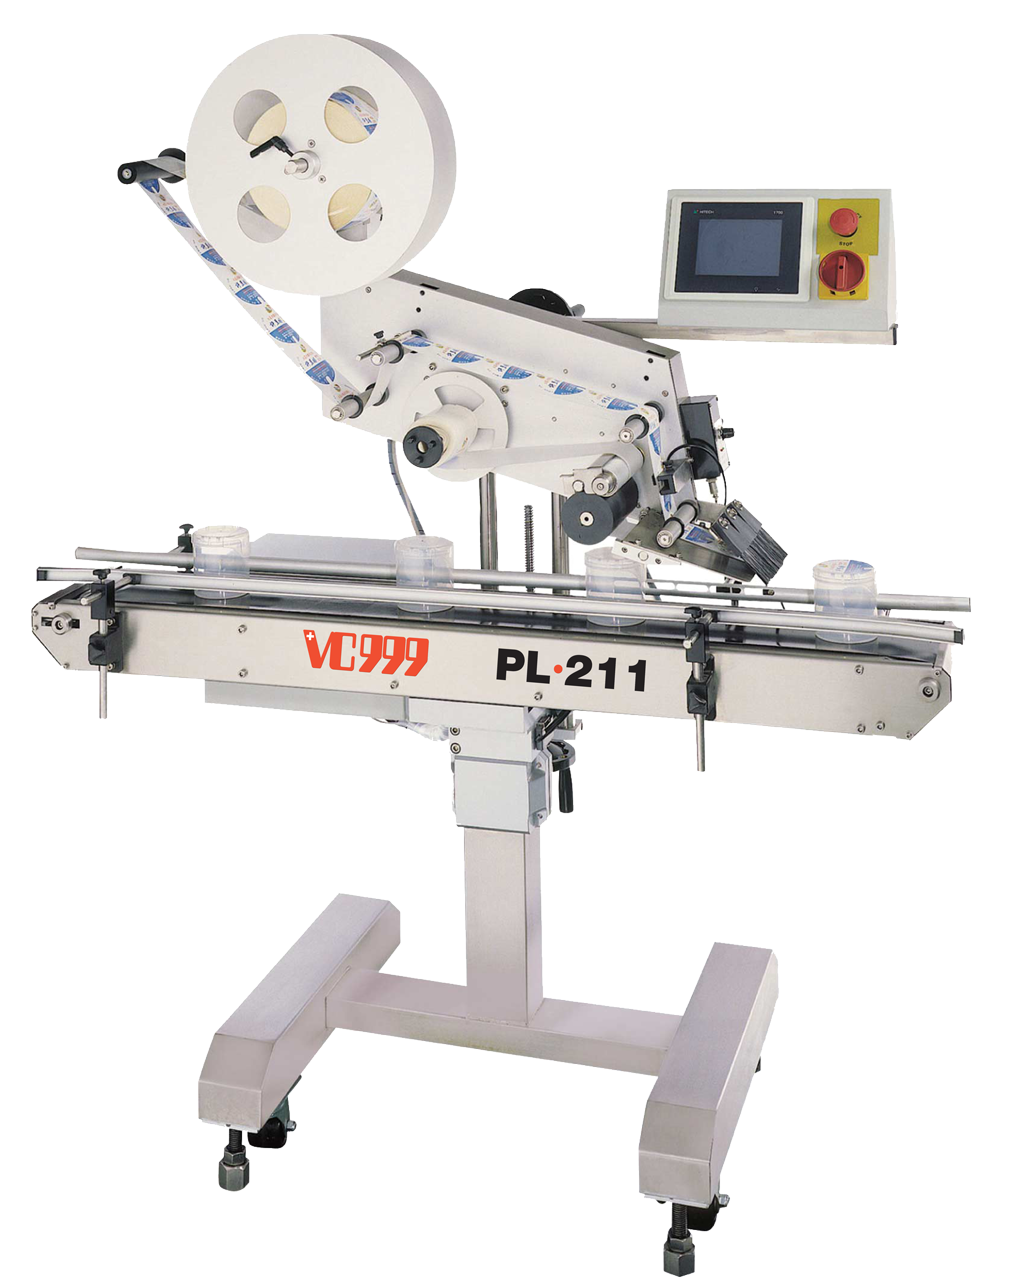 Labeling equipment VC999 PL 211